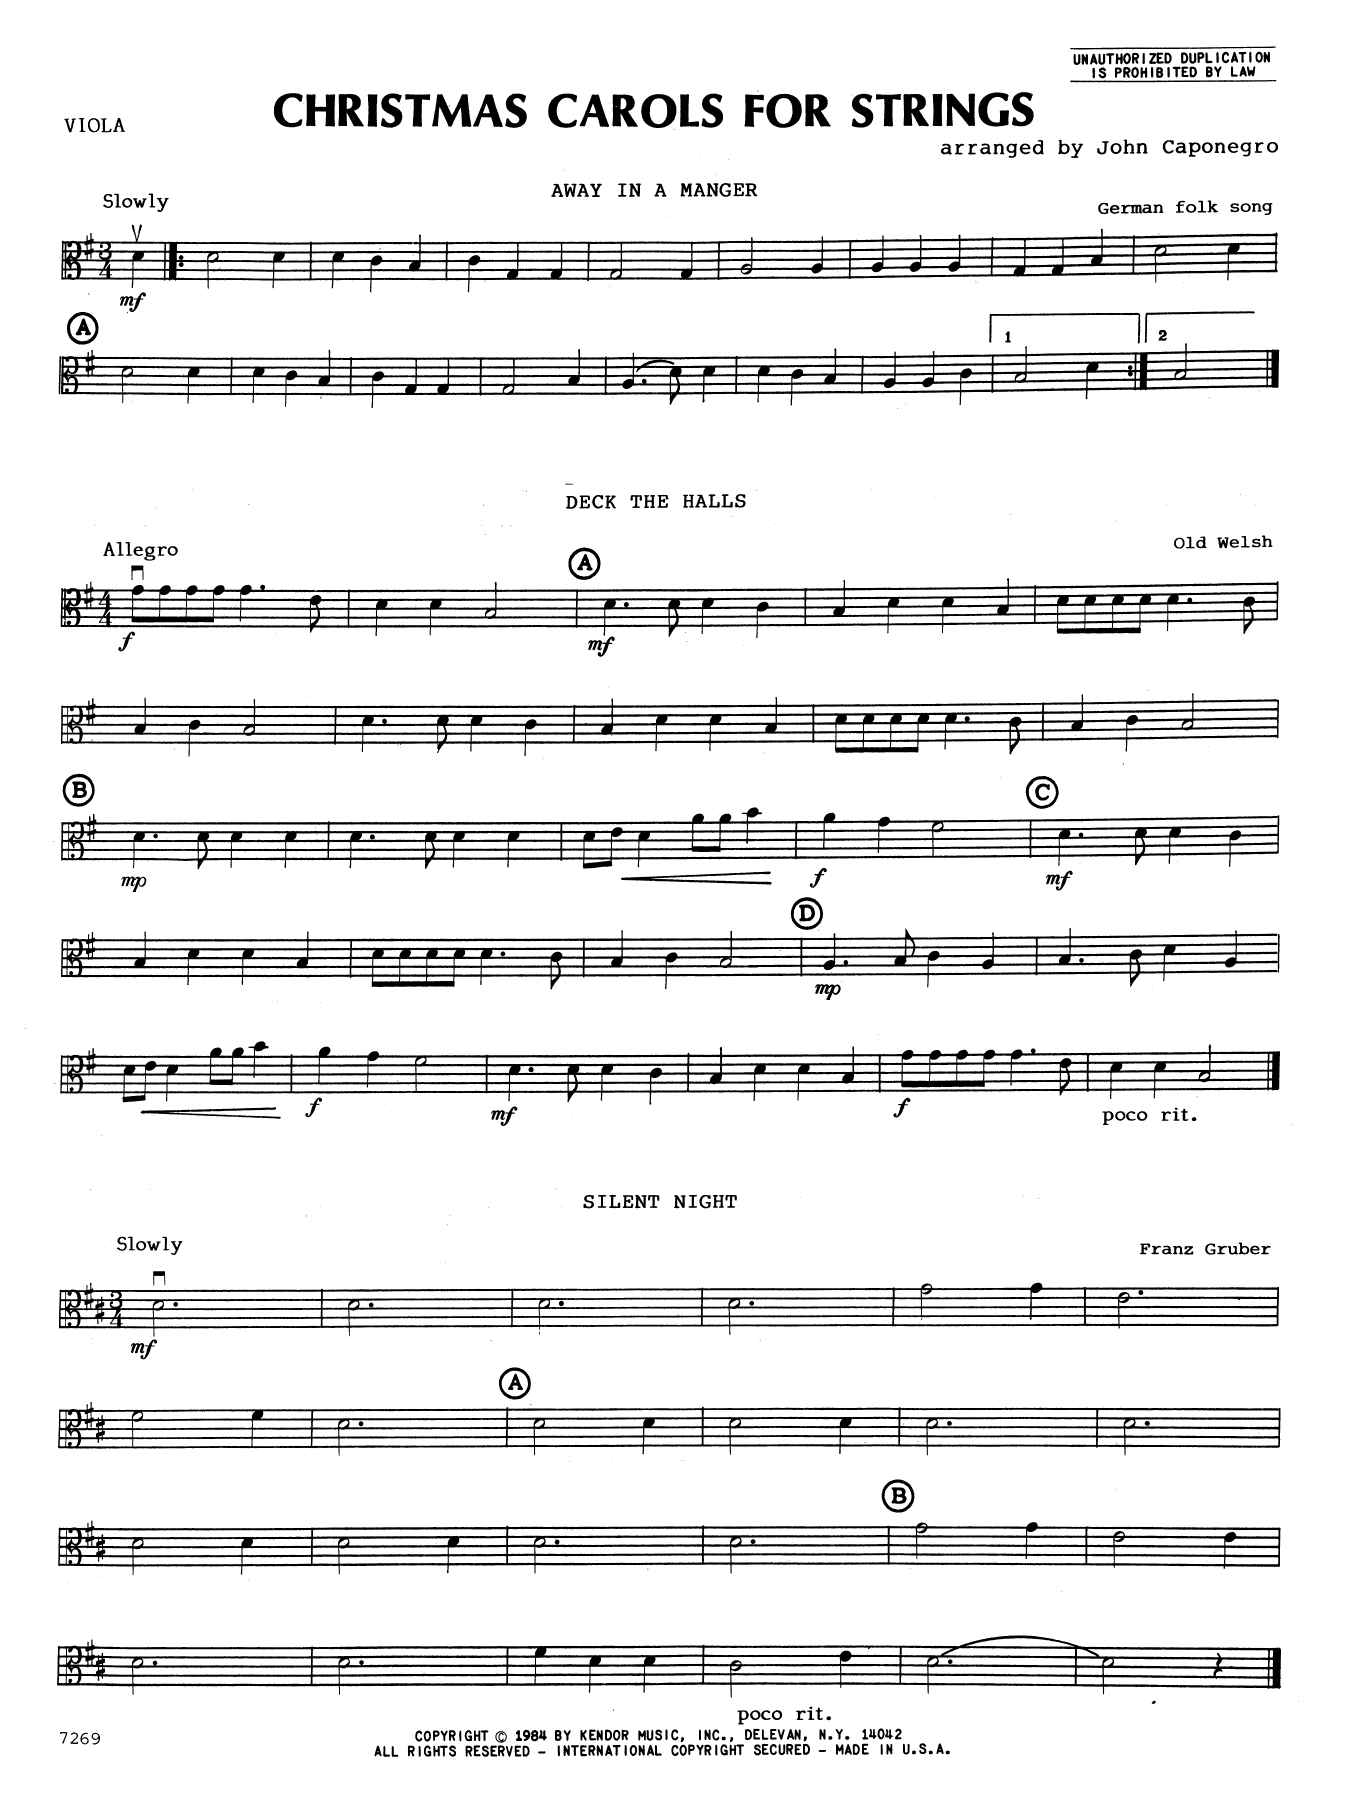 Download John Caponegro Christmas Carols for Strings - Viola Sheet Music